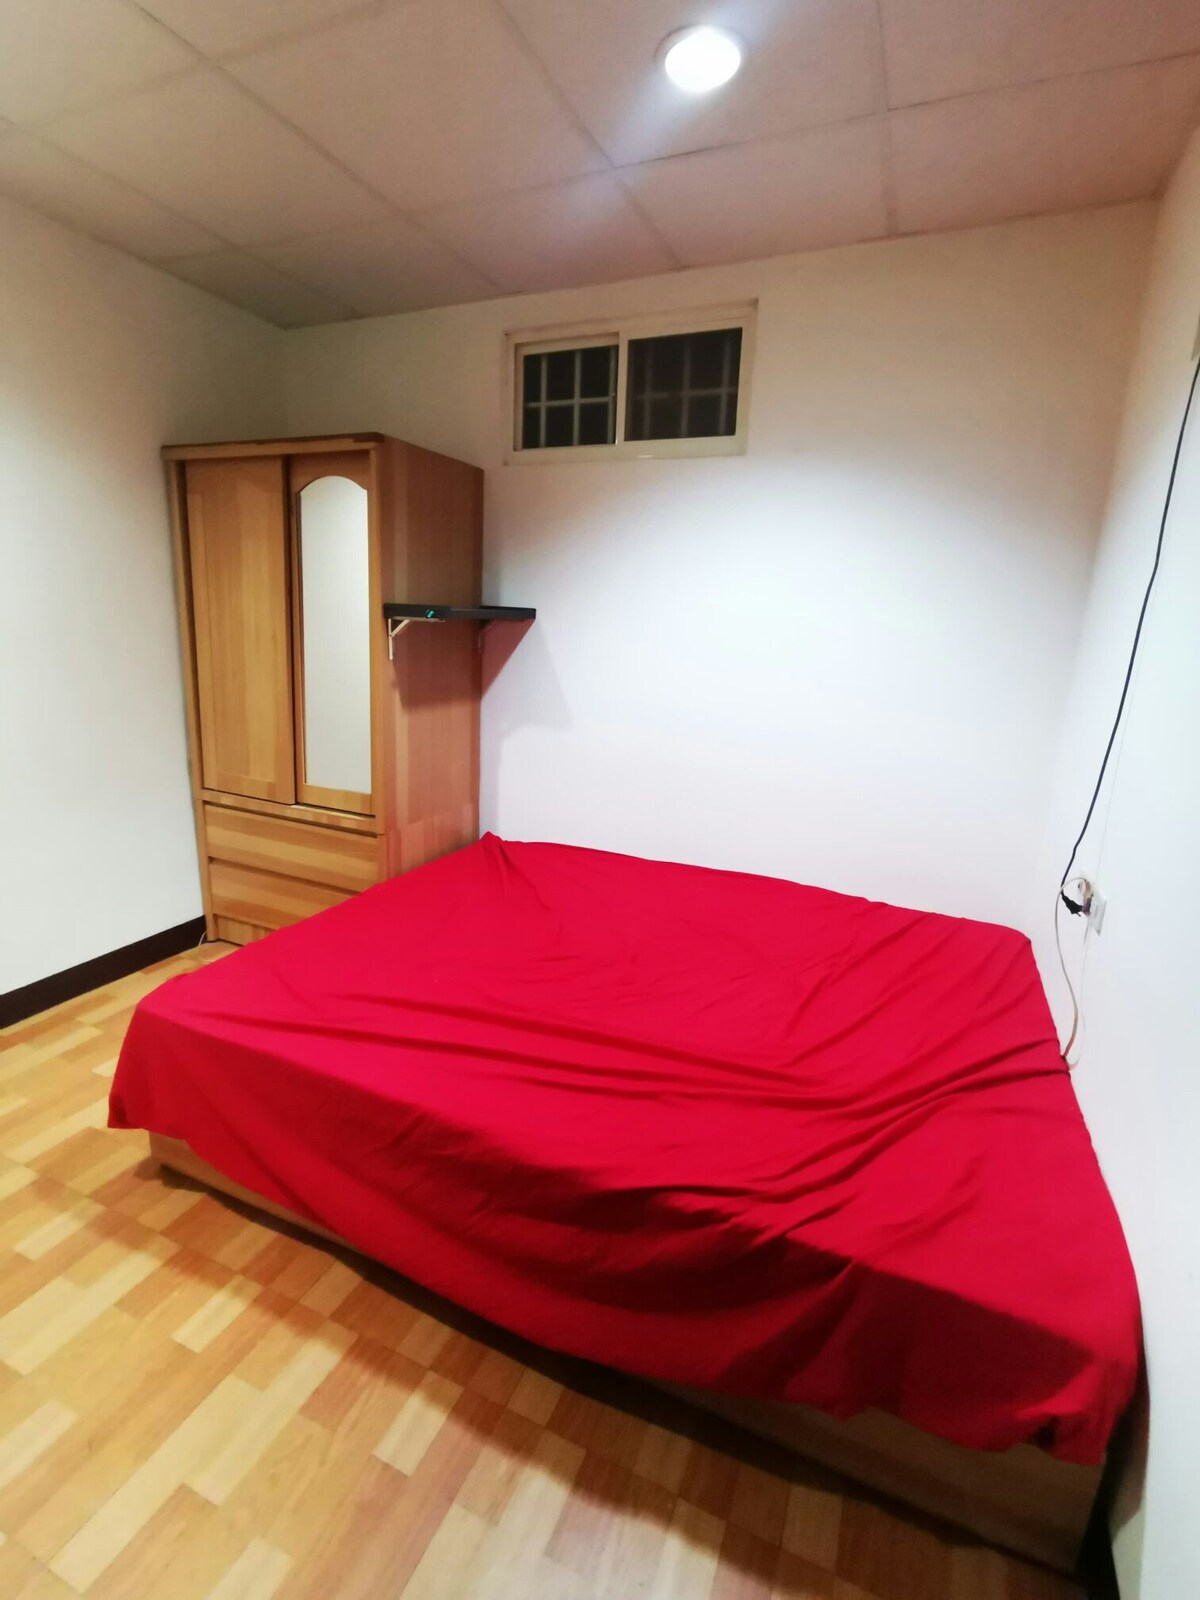 Cheap room available near St. Ignatius station